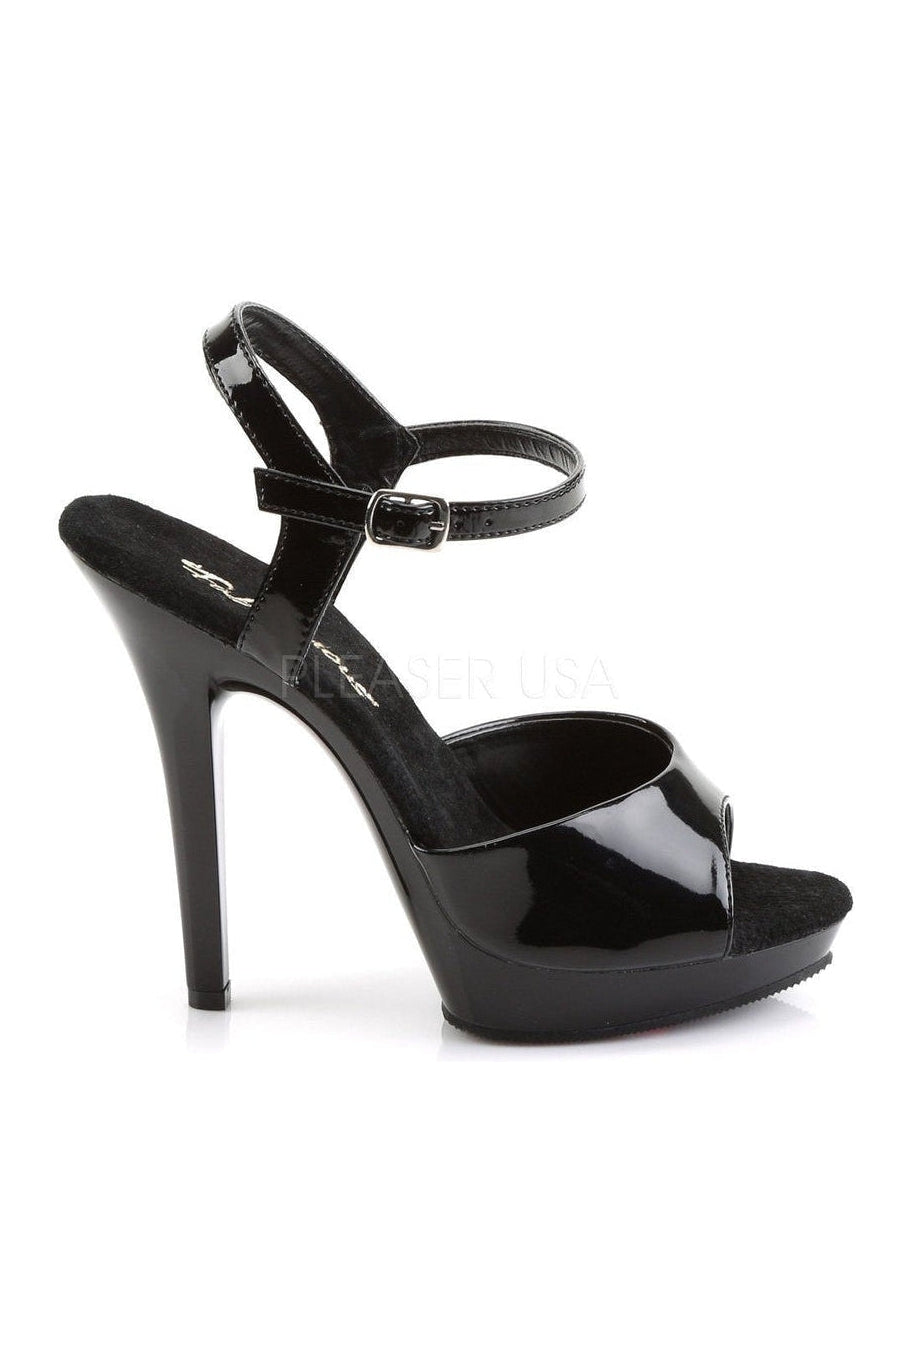 LIP-109 Sandal | Black Patent-Fabulicious-Sandals-SEXYSHOES.COM